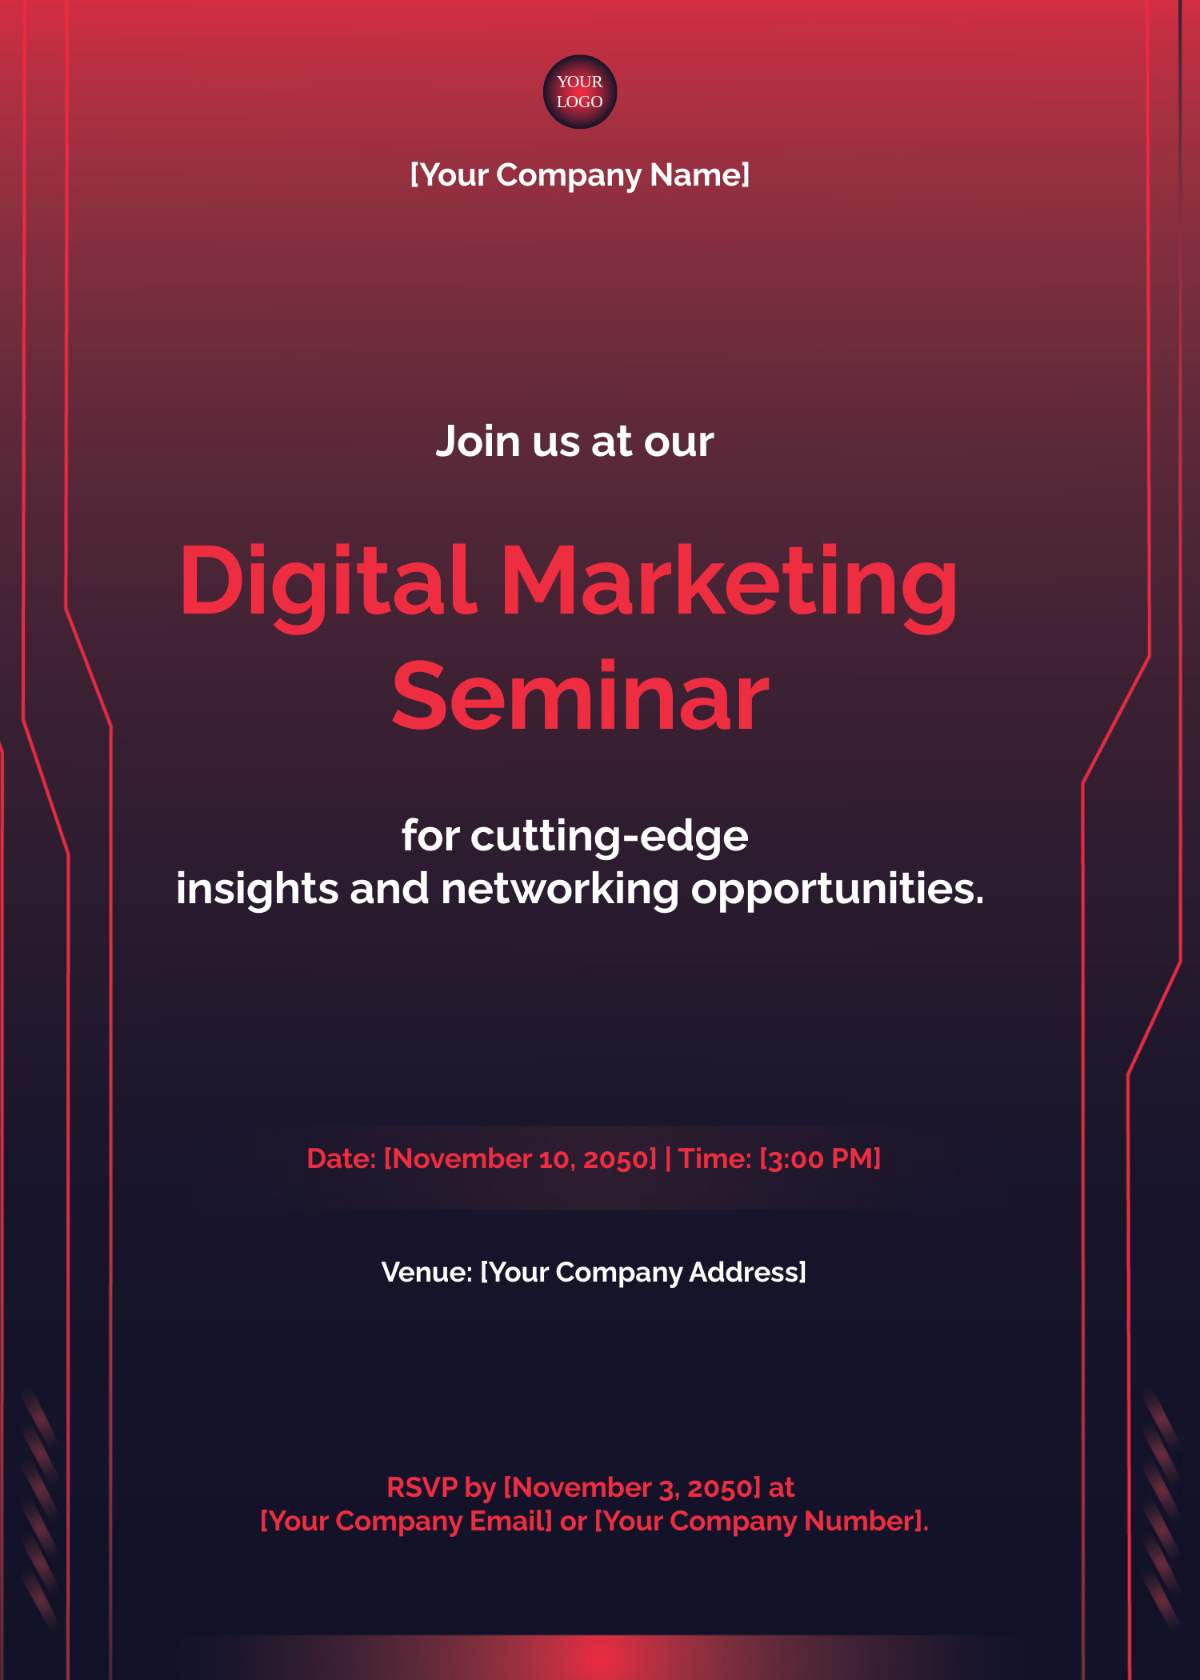 Digital Marketing Seminar Invitation Card Template